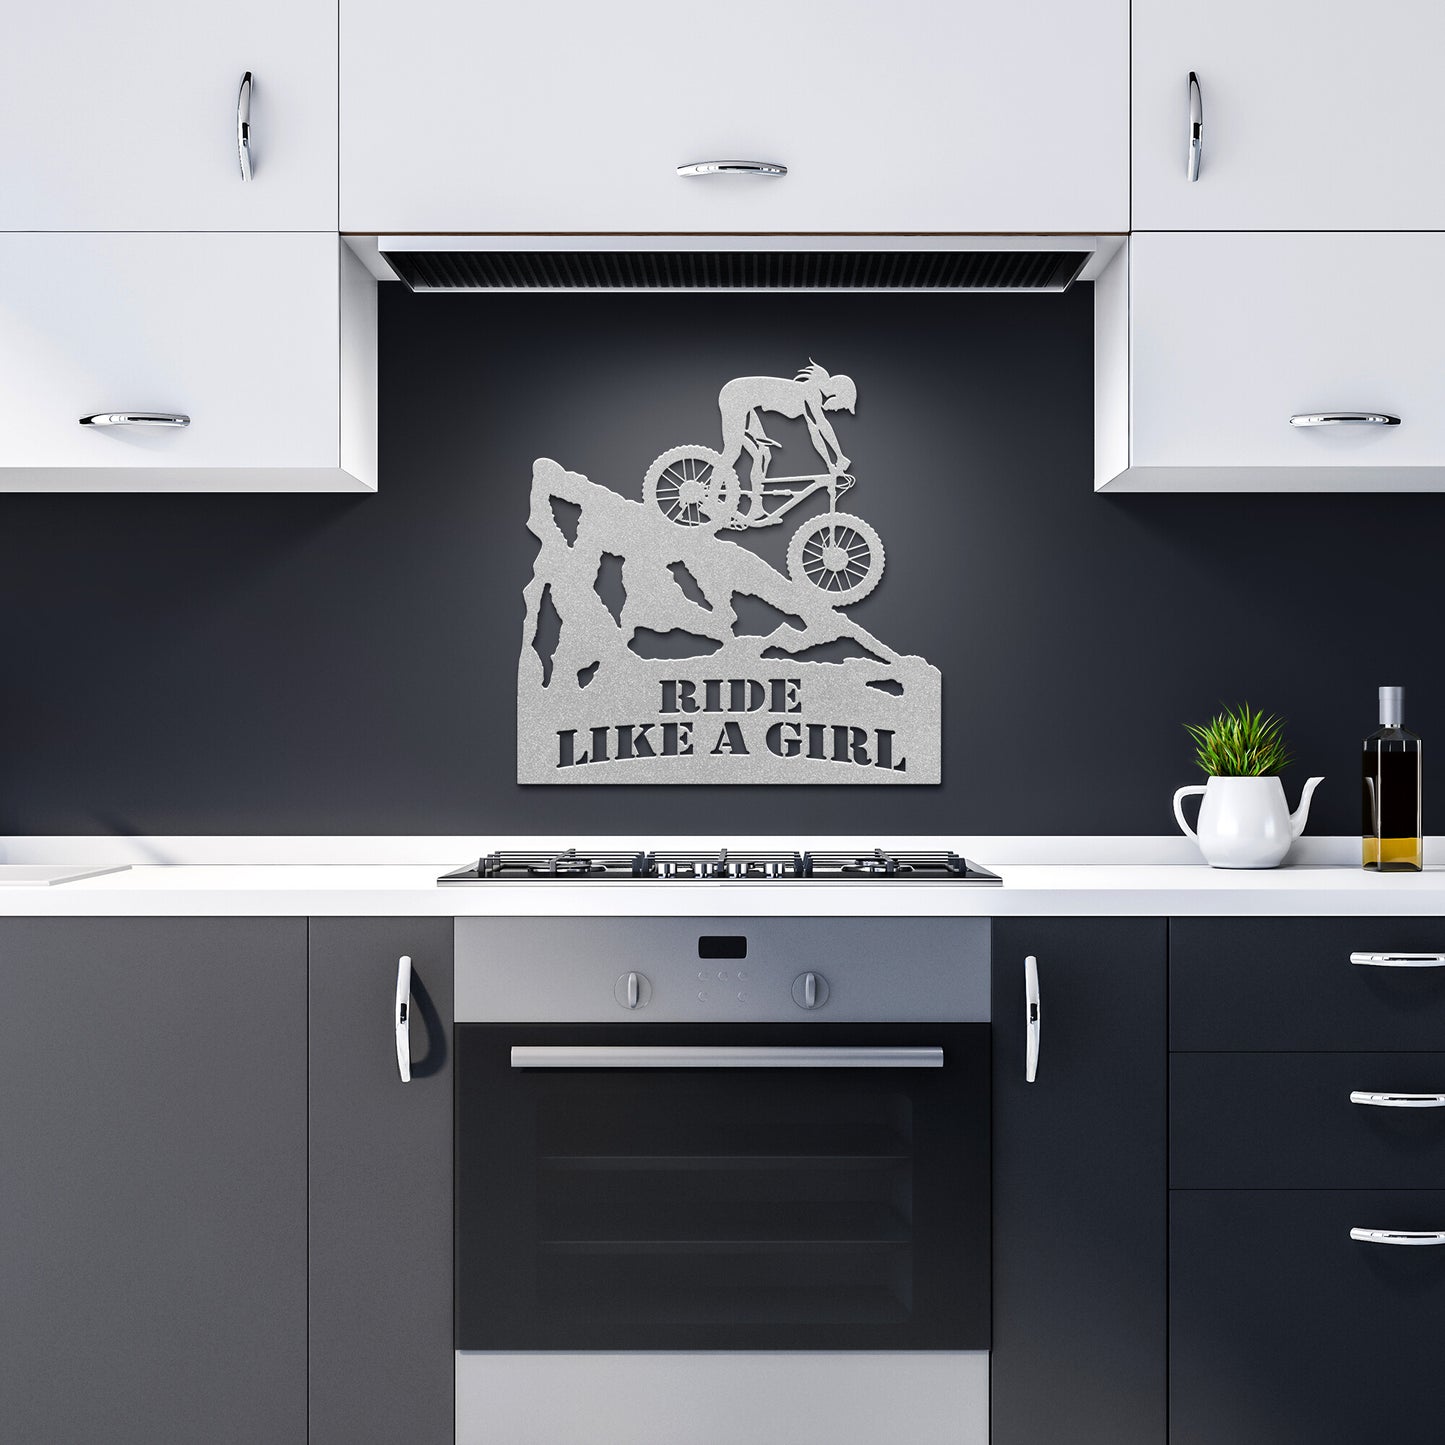 Ride Like a Girl Mountain Biker Die Cut Metal Wall Art Sign for Home